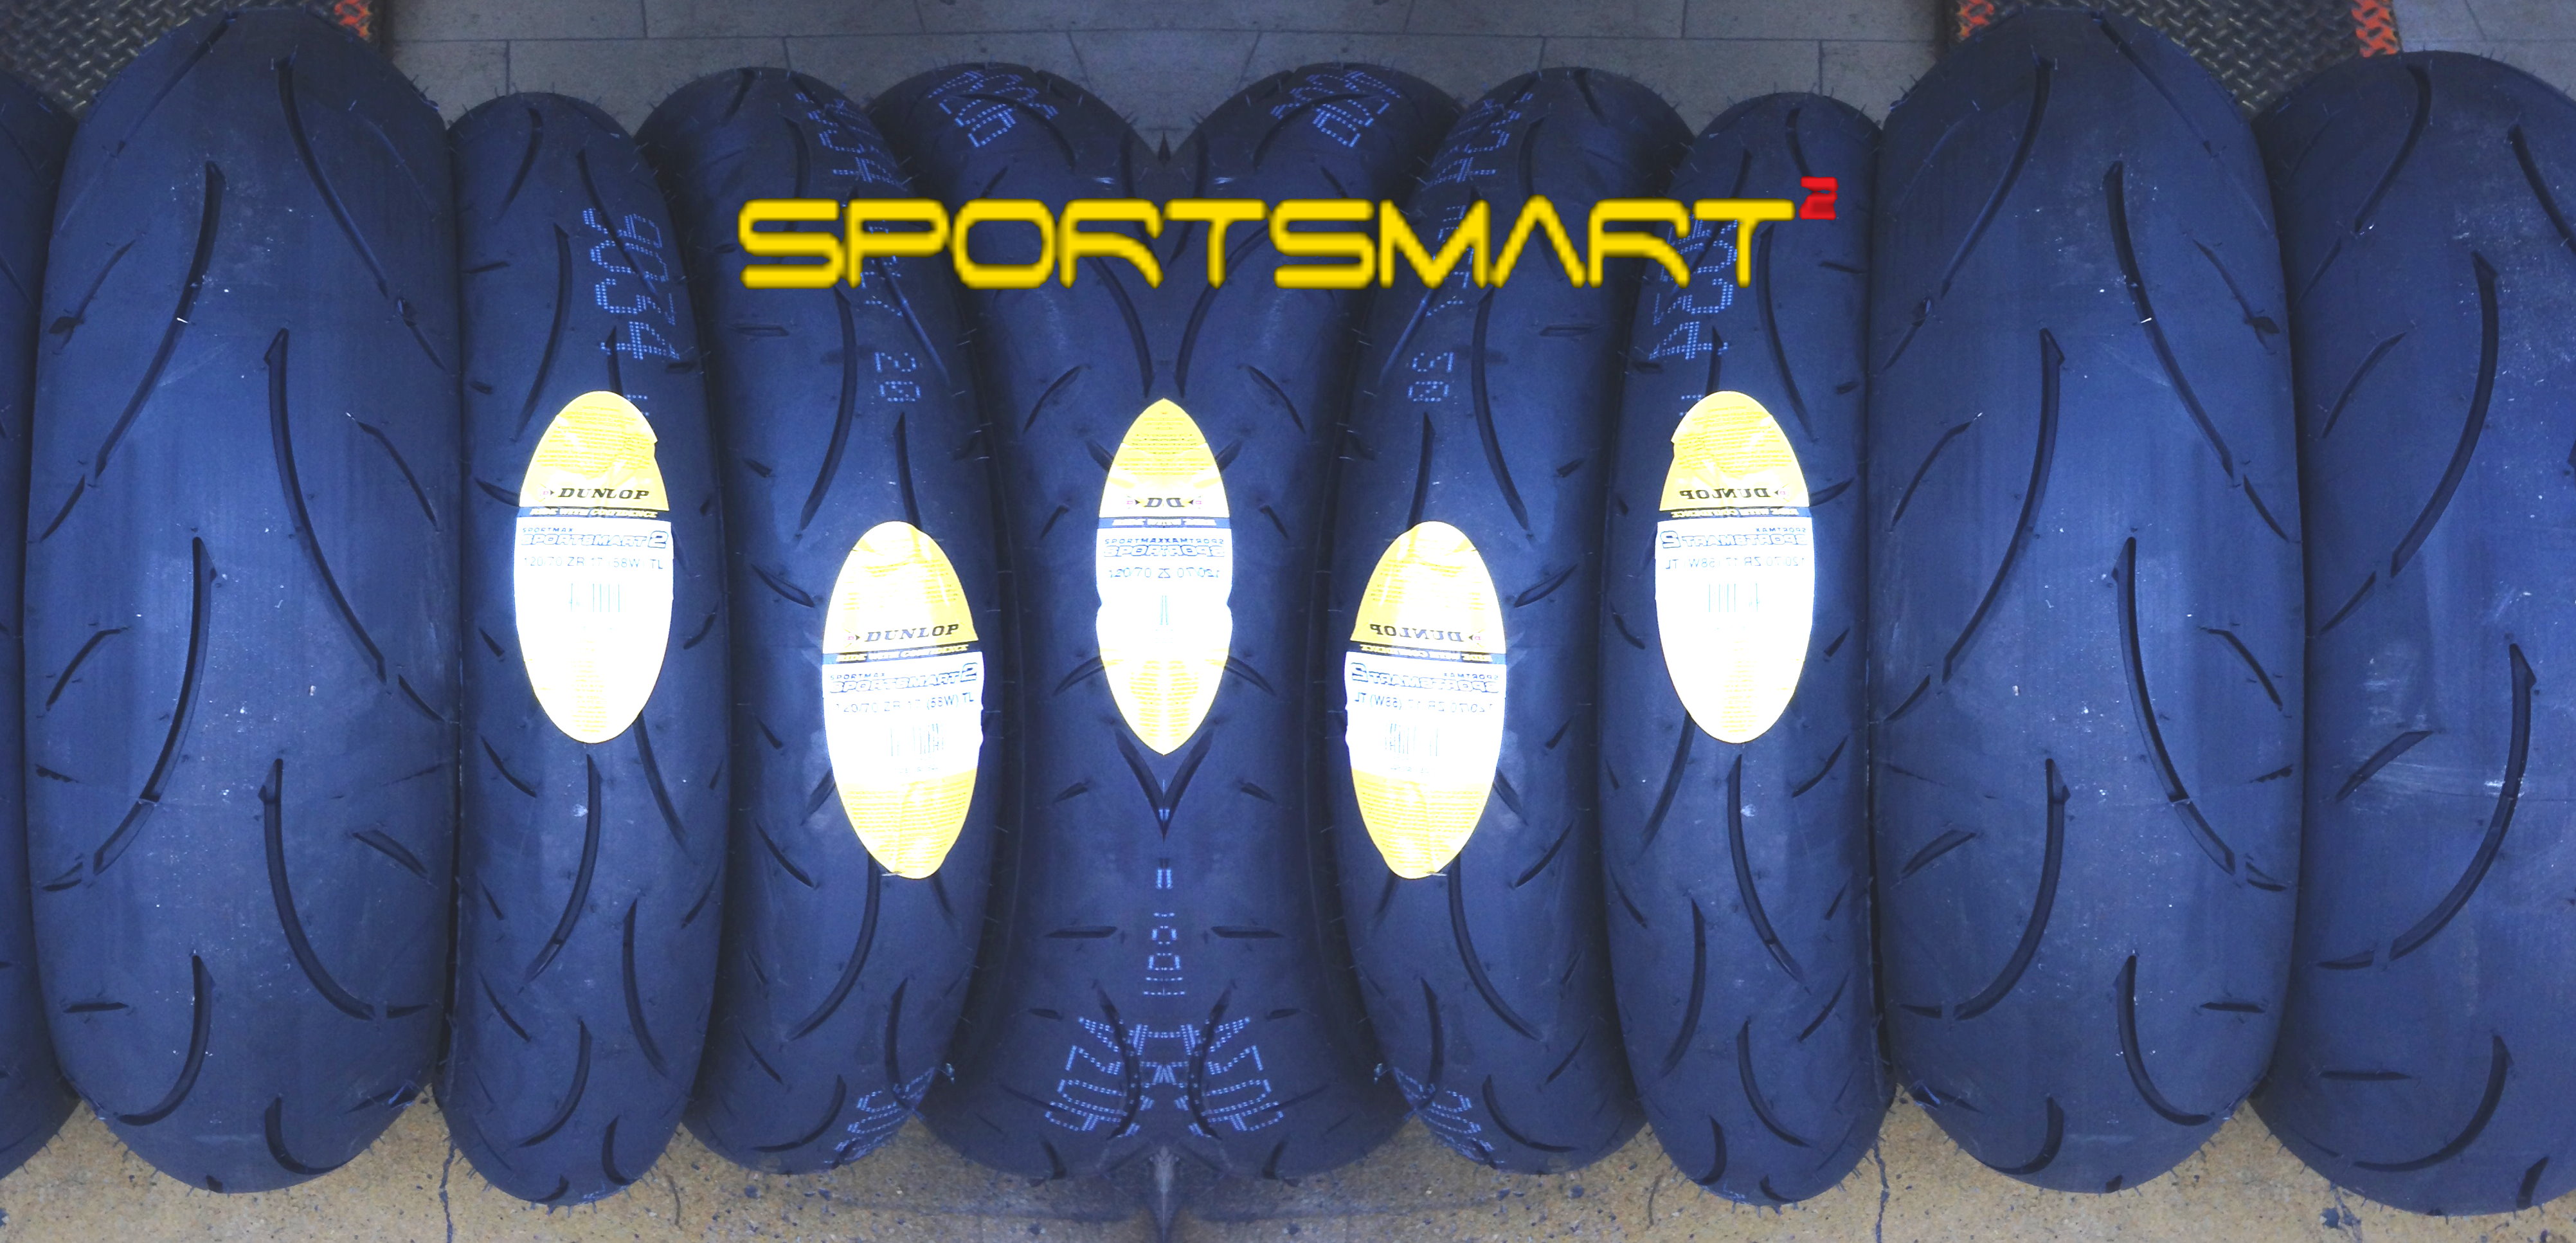 [Gomme Moto] - Arrivate le nuove DUNLOP Sport Smart 2